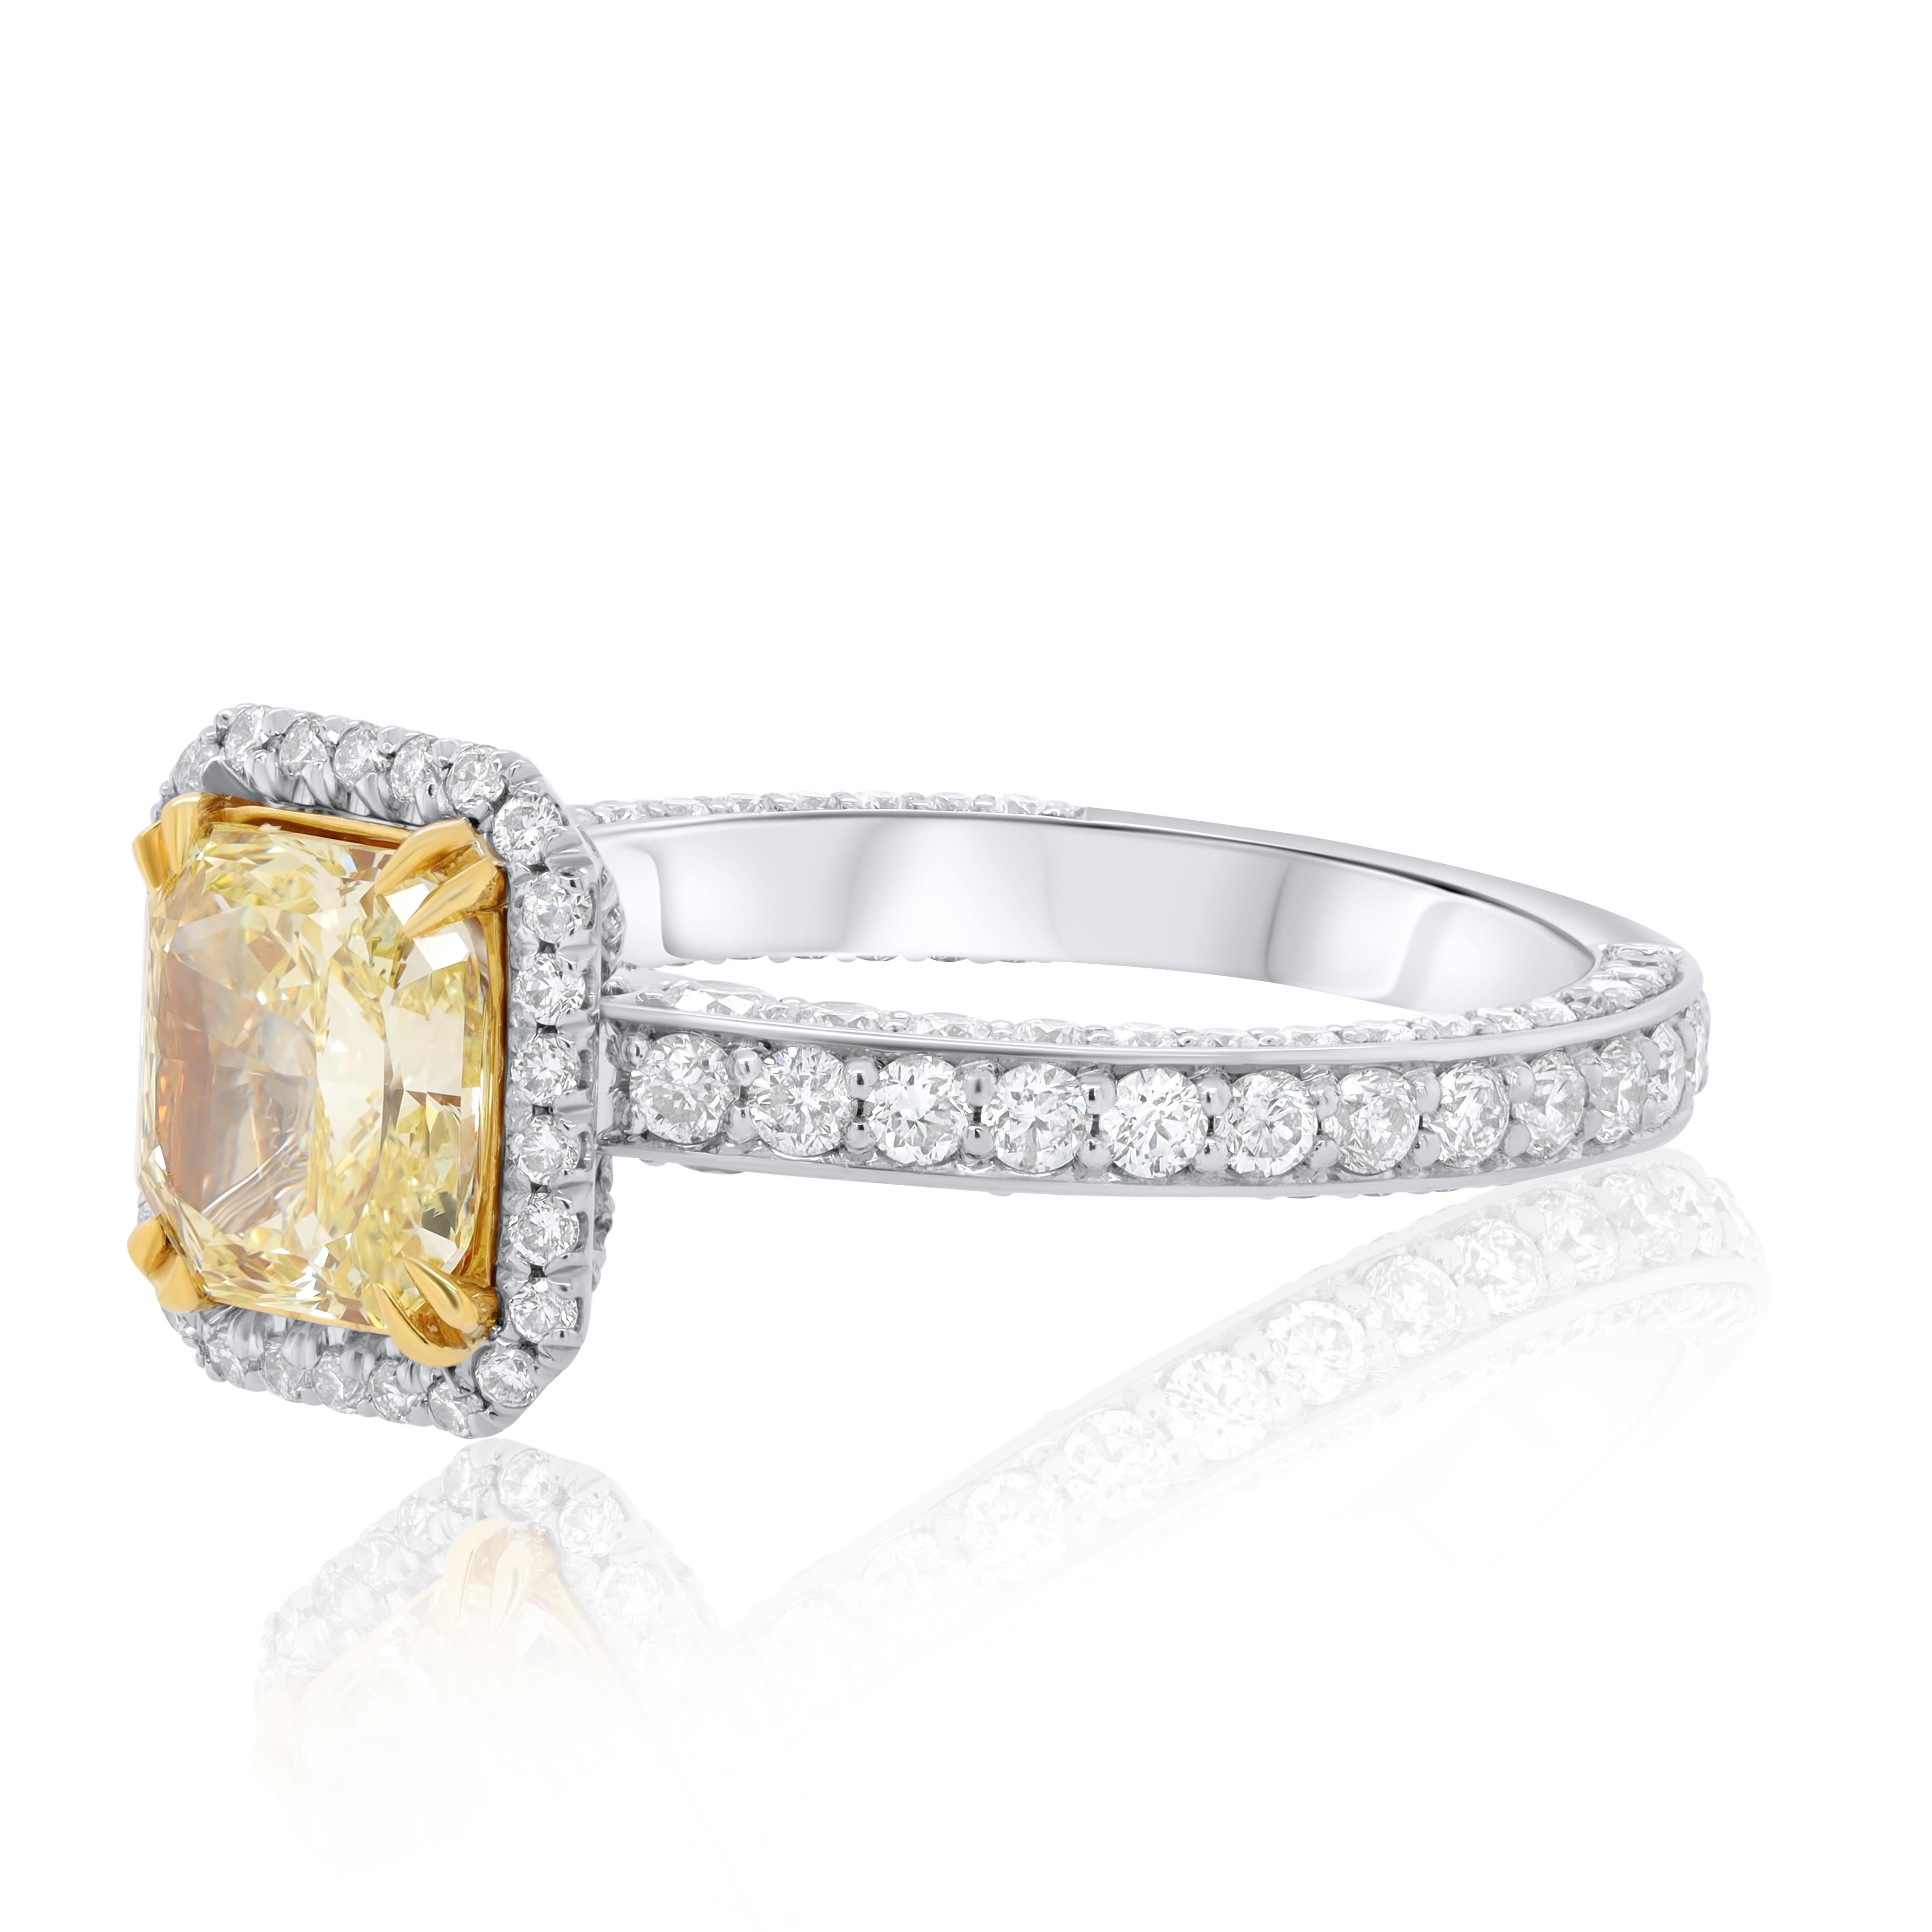 Princess Cut Diana M.  1.39 ct GIA certified (FIY VS2) fancy intense yellow radient diamond  For Sale